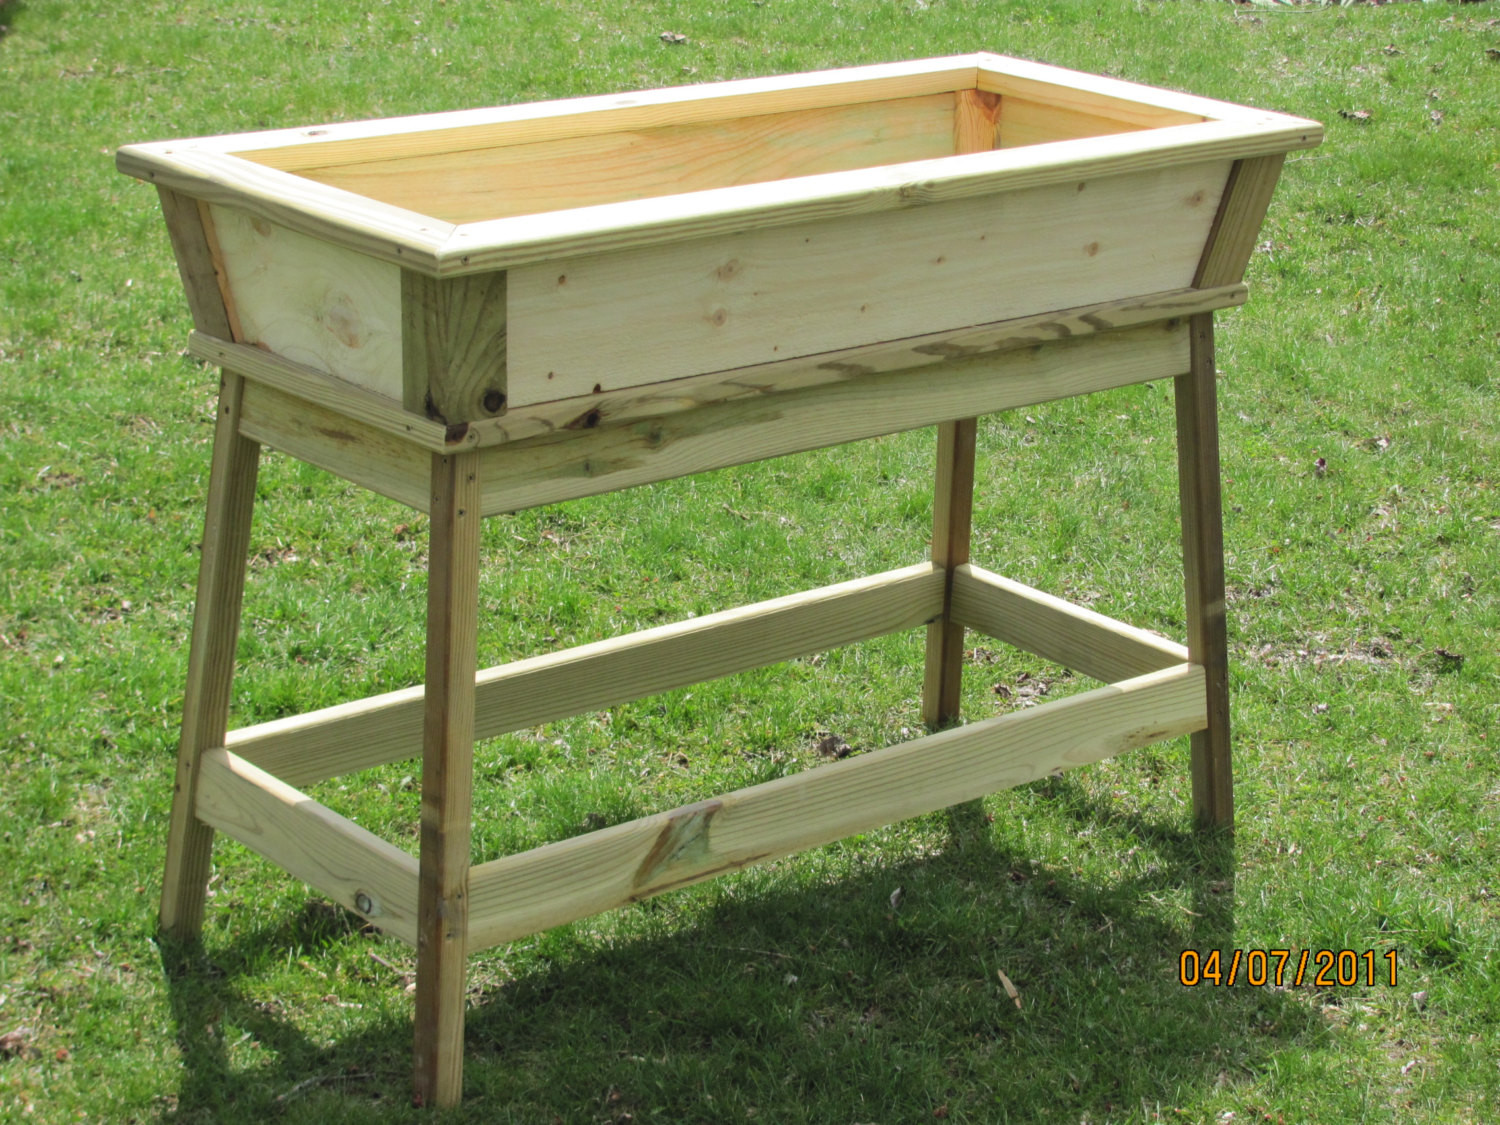 Best ideas about Garden Planter Box
. Save or Pin Outdoor Planter Planter Box Wooden Planter Cedar Planter Now.